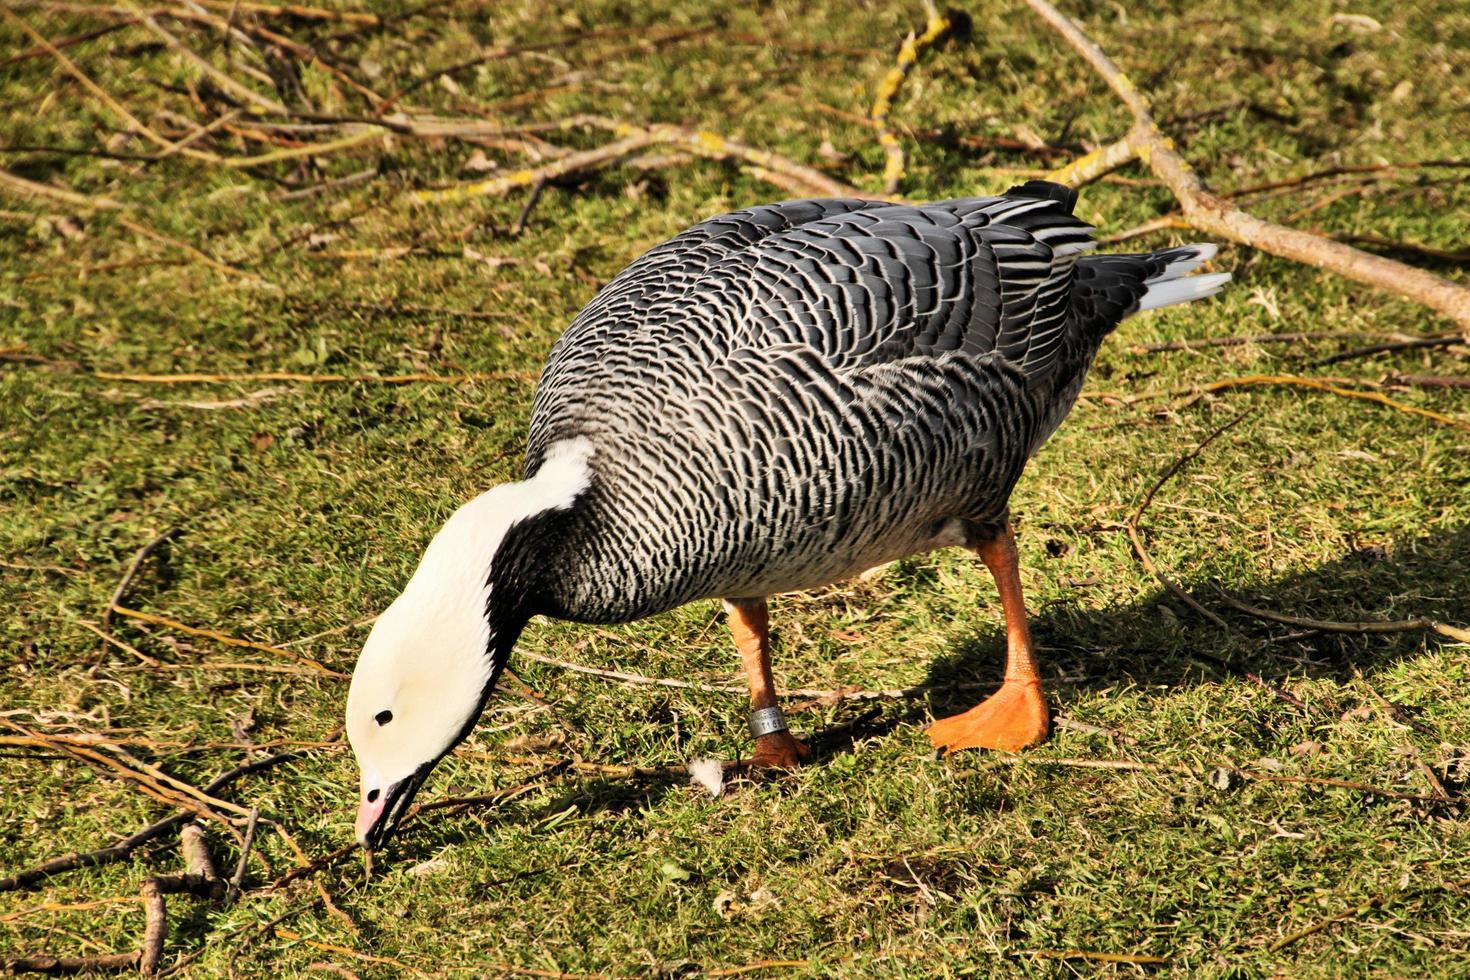 A view of an Emporer Goose photo